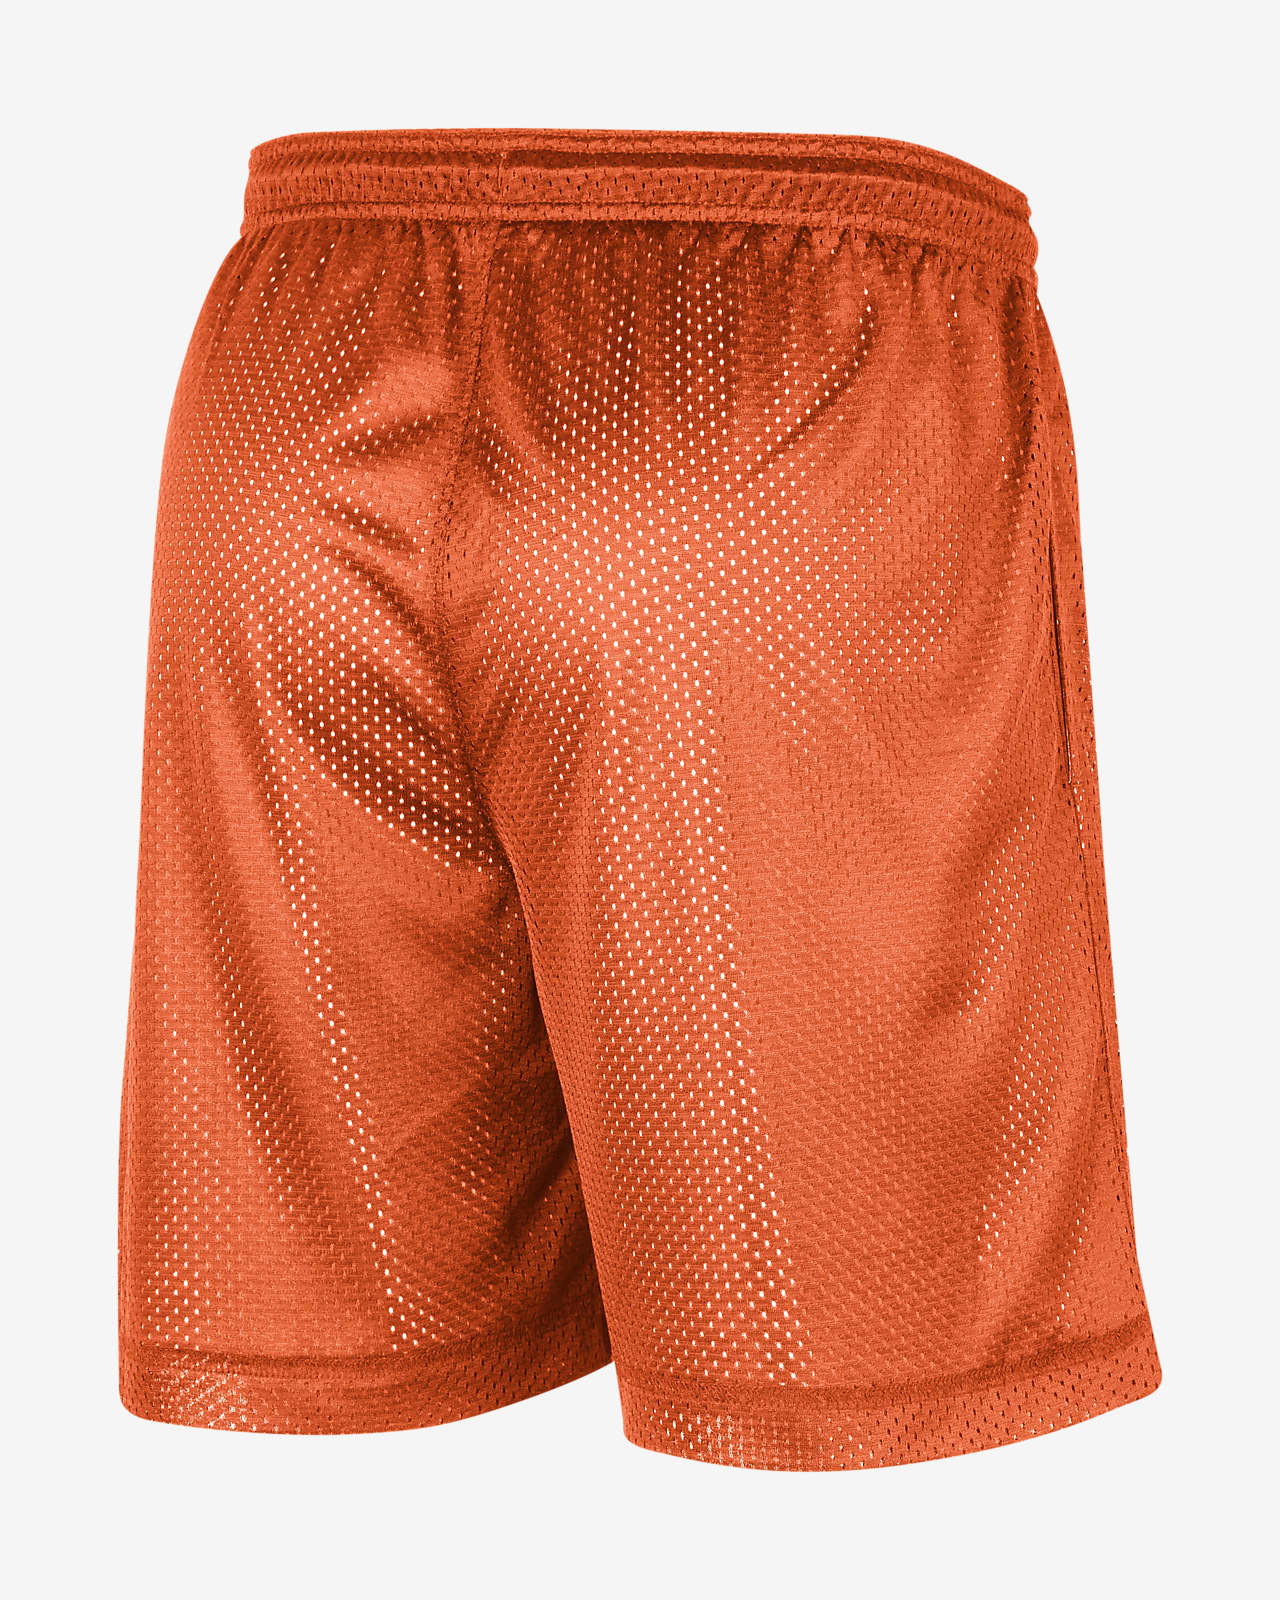 Reversible Shorts (M,W,Y) – 0213B